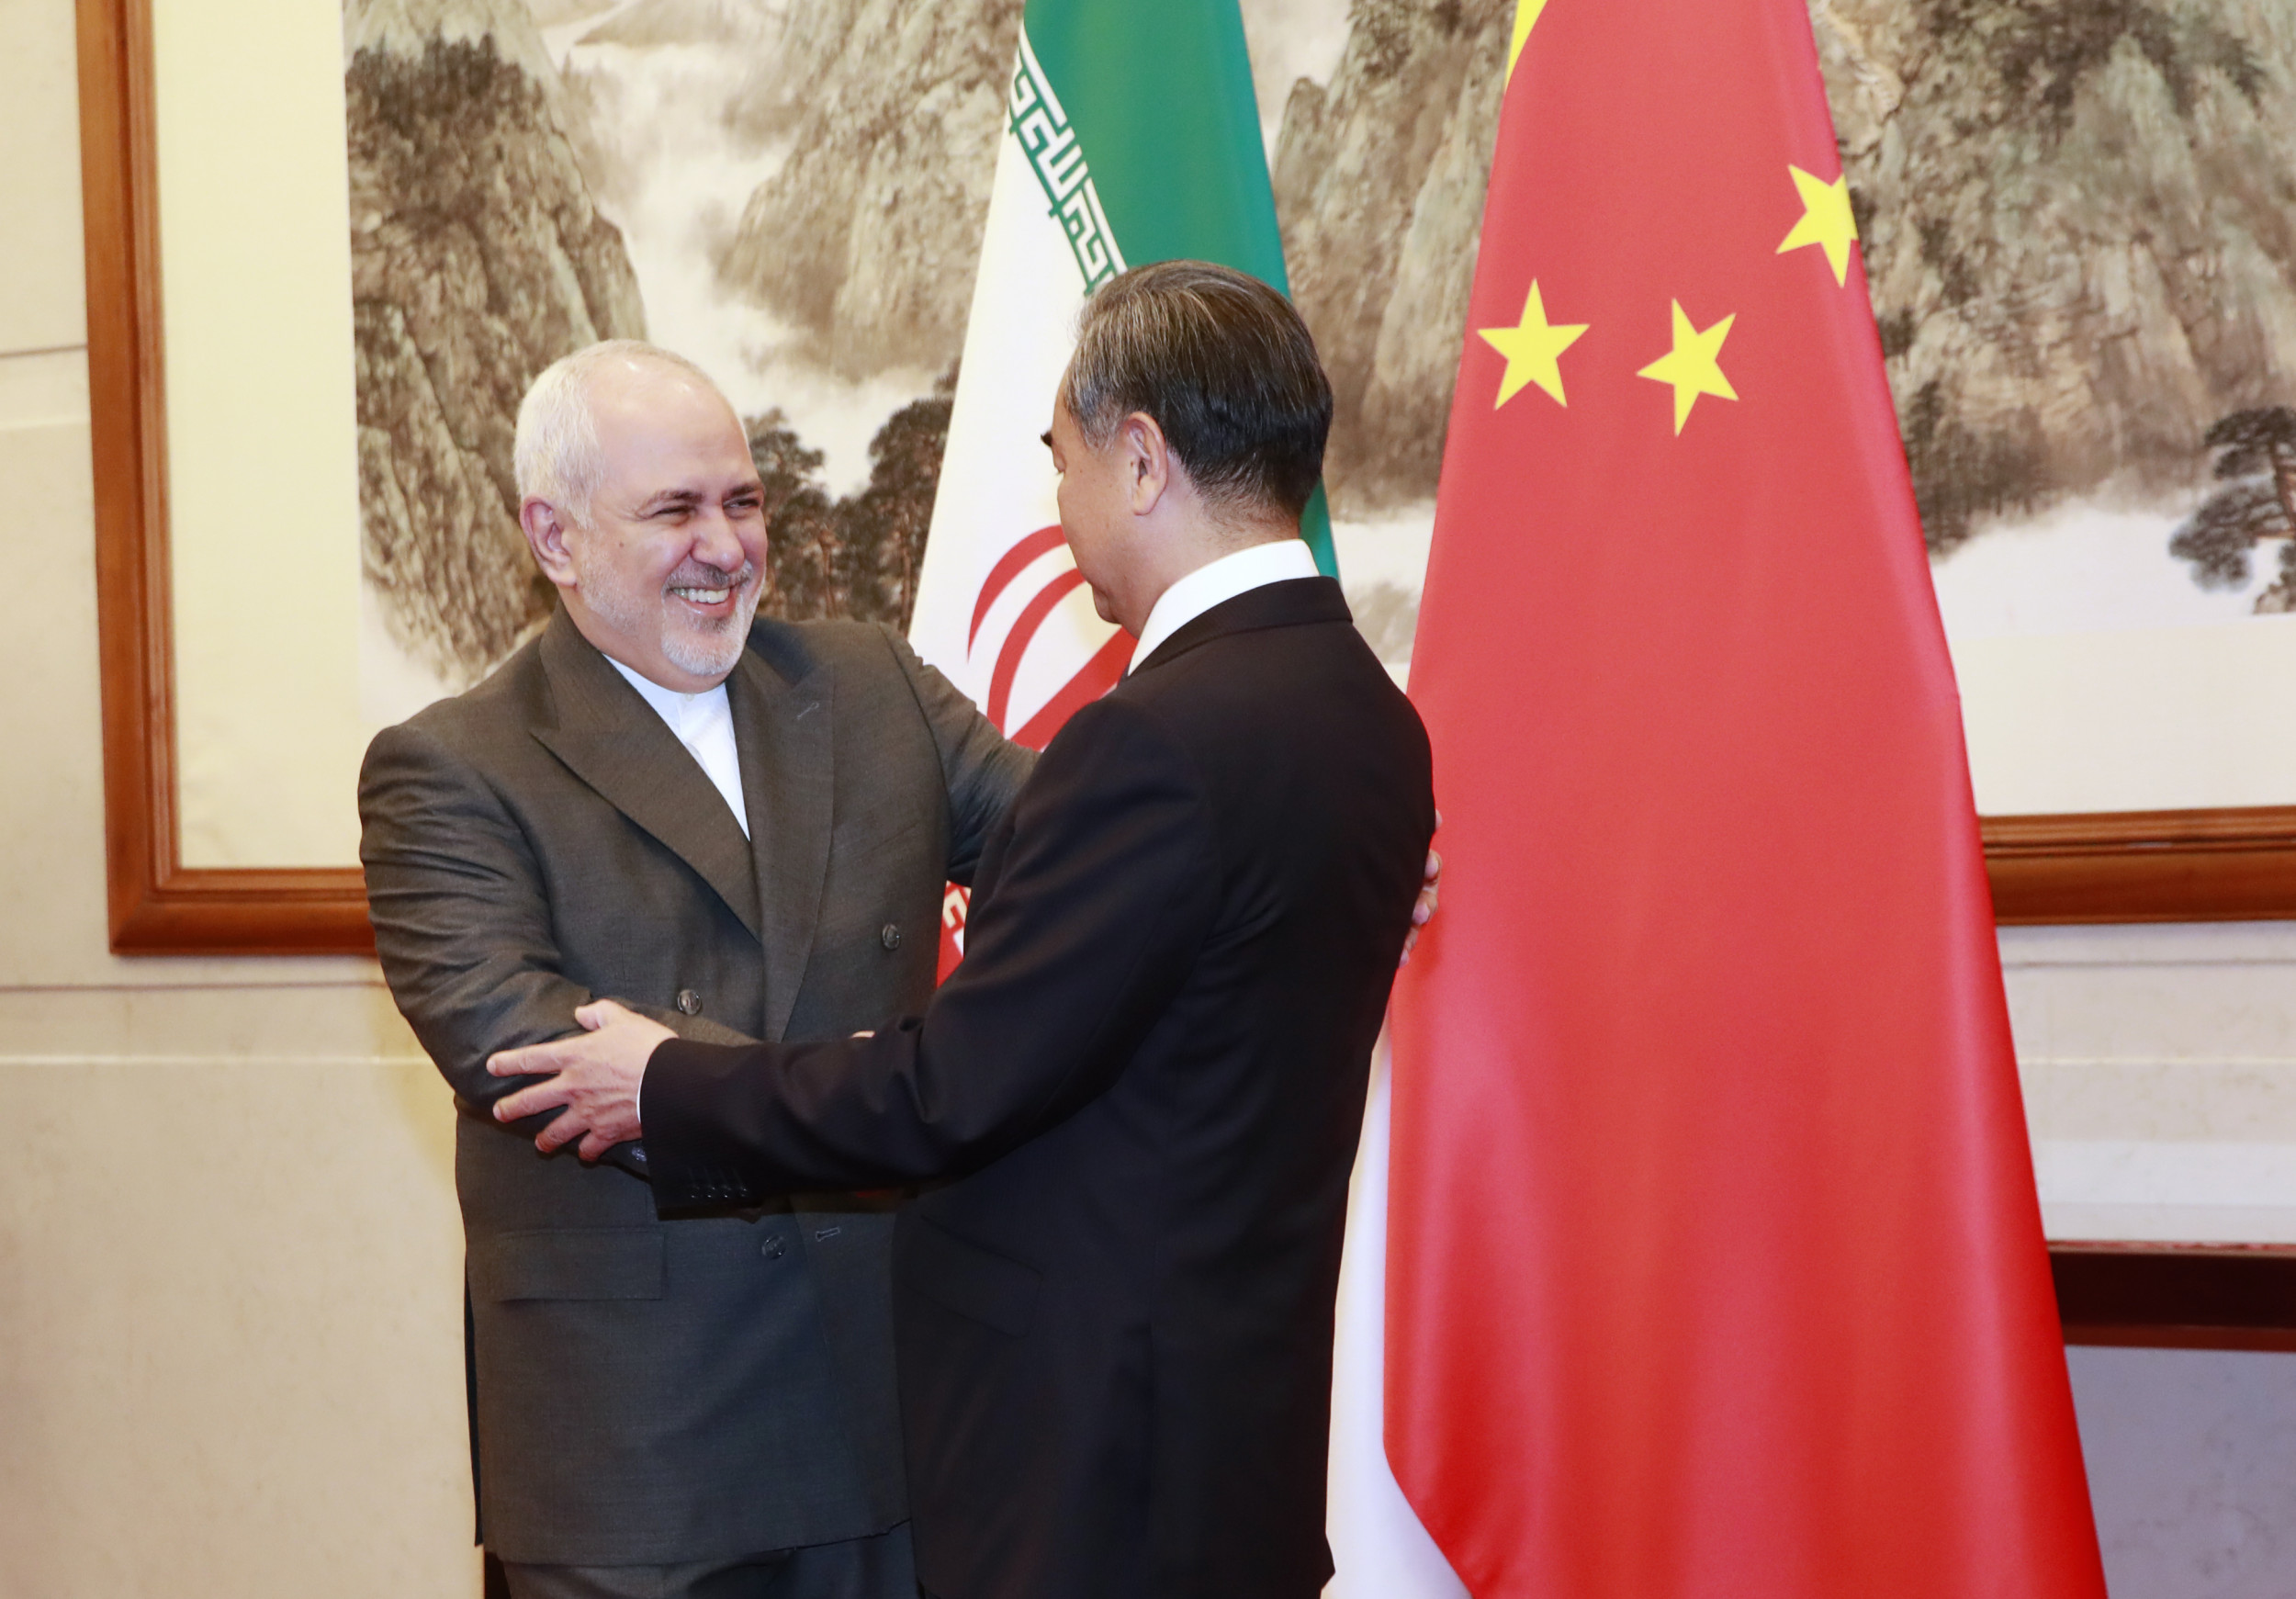 u-s-needs-a-broad-response-to-china-iran-moves-opinion